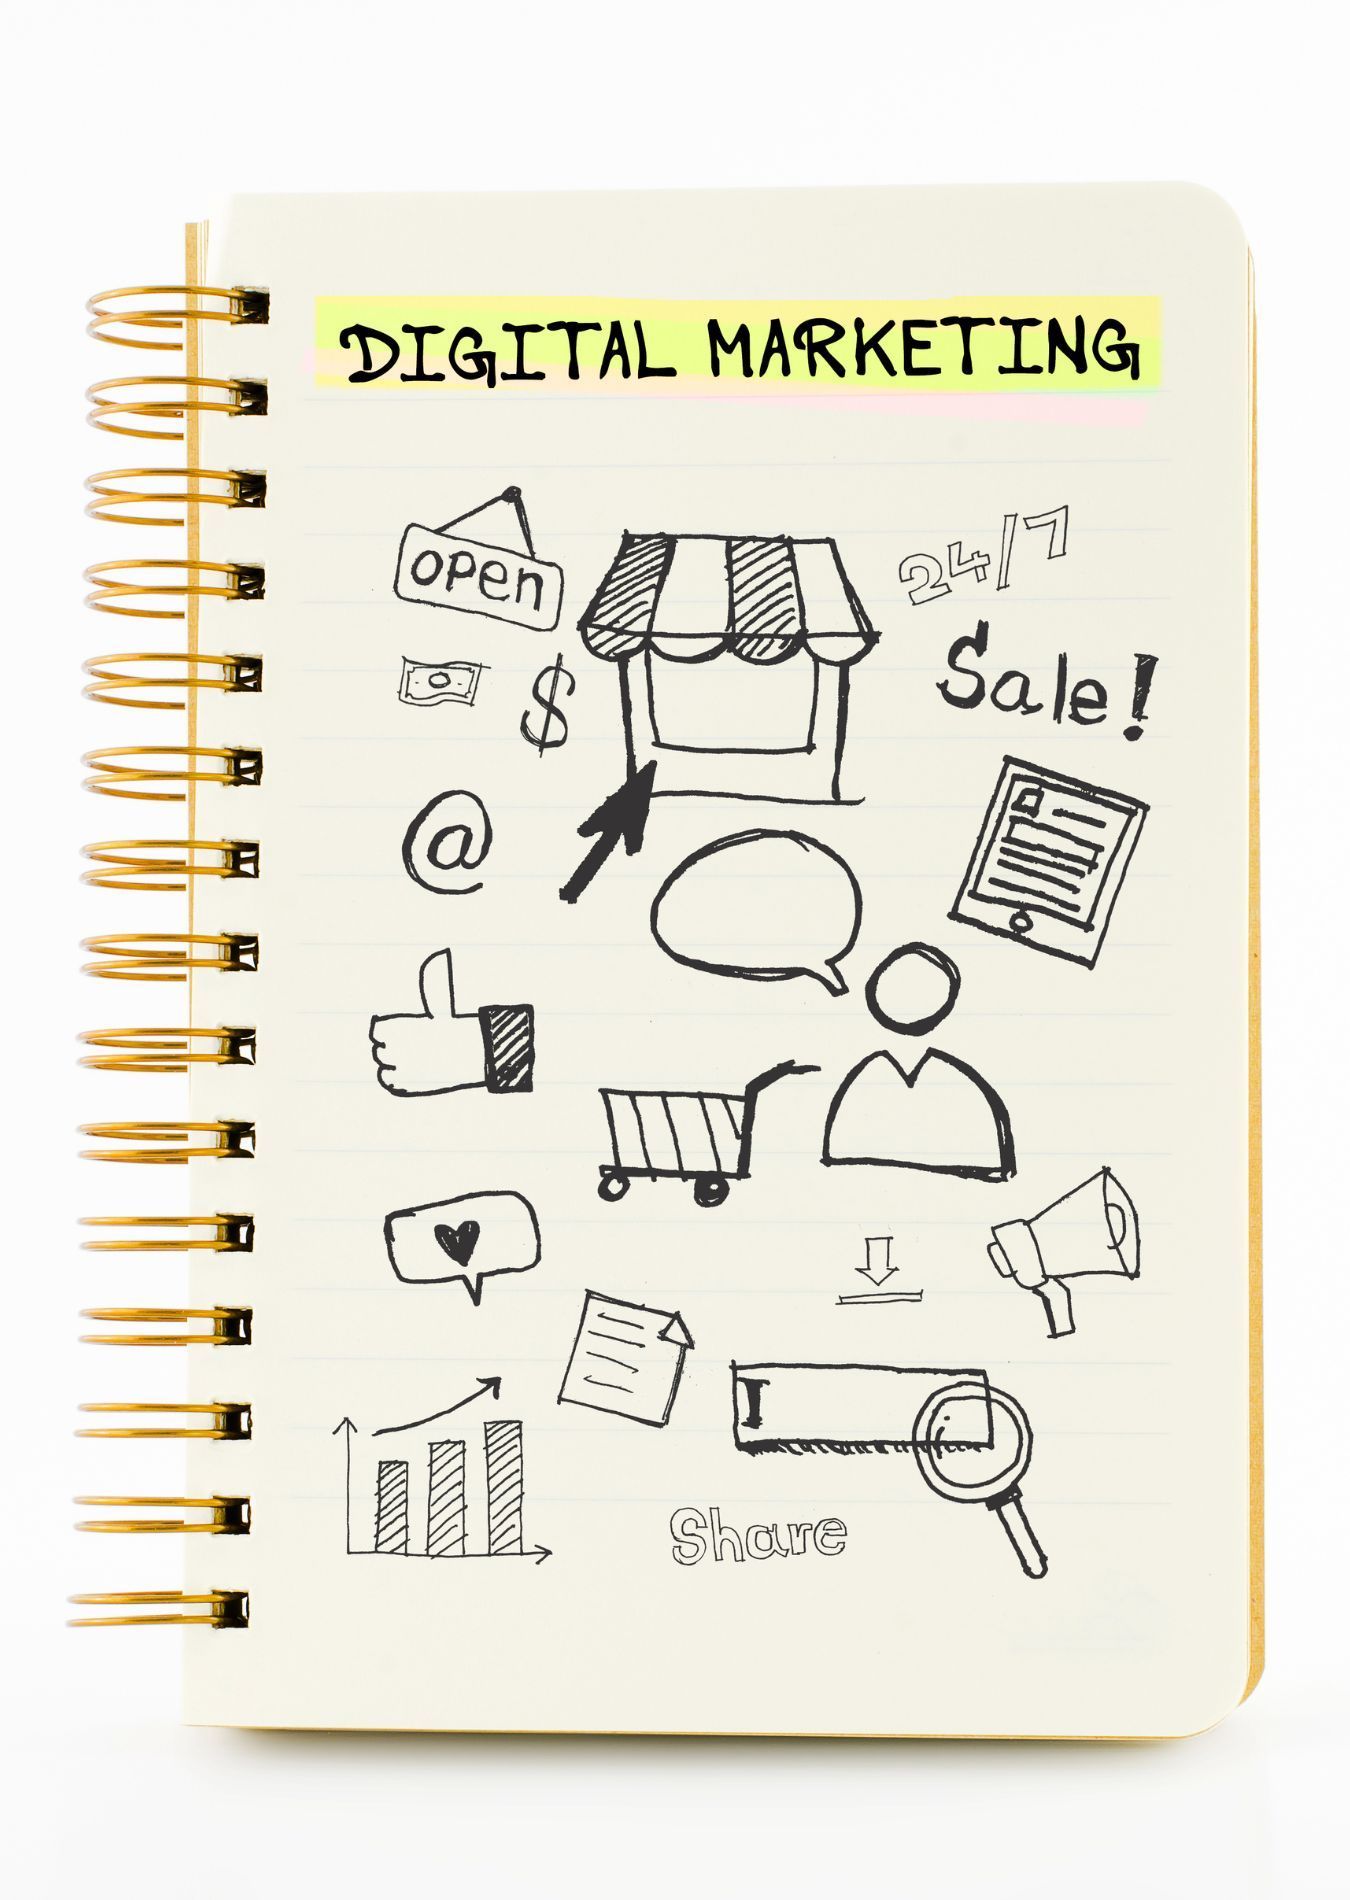 Tampa FL digital marketing company plan